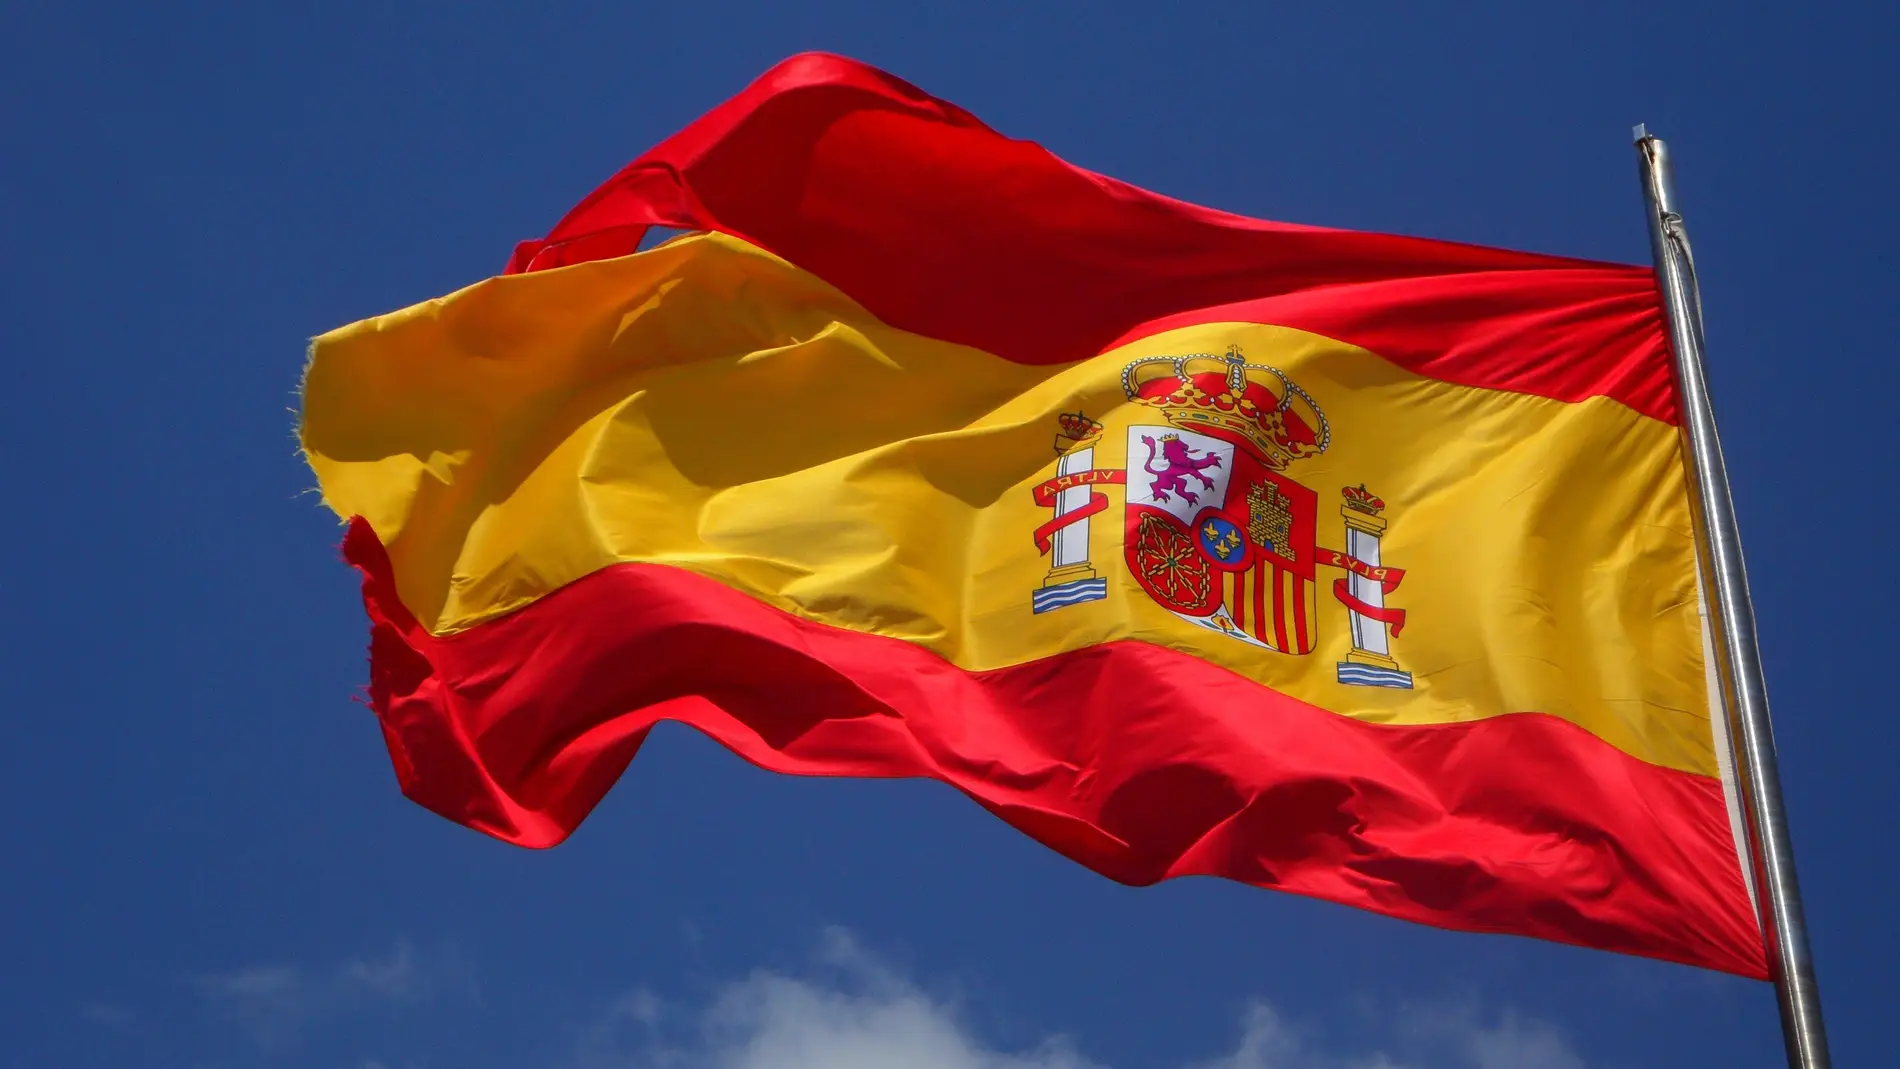 La carta de amor a España de un americano: "No os dais cuenta de lo que tenéis"